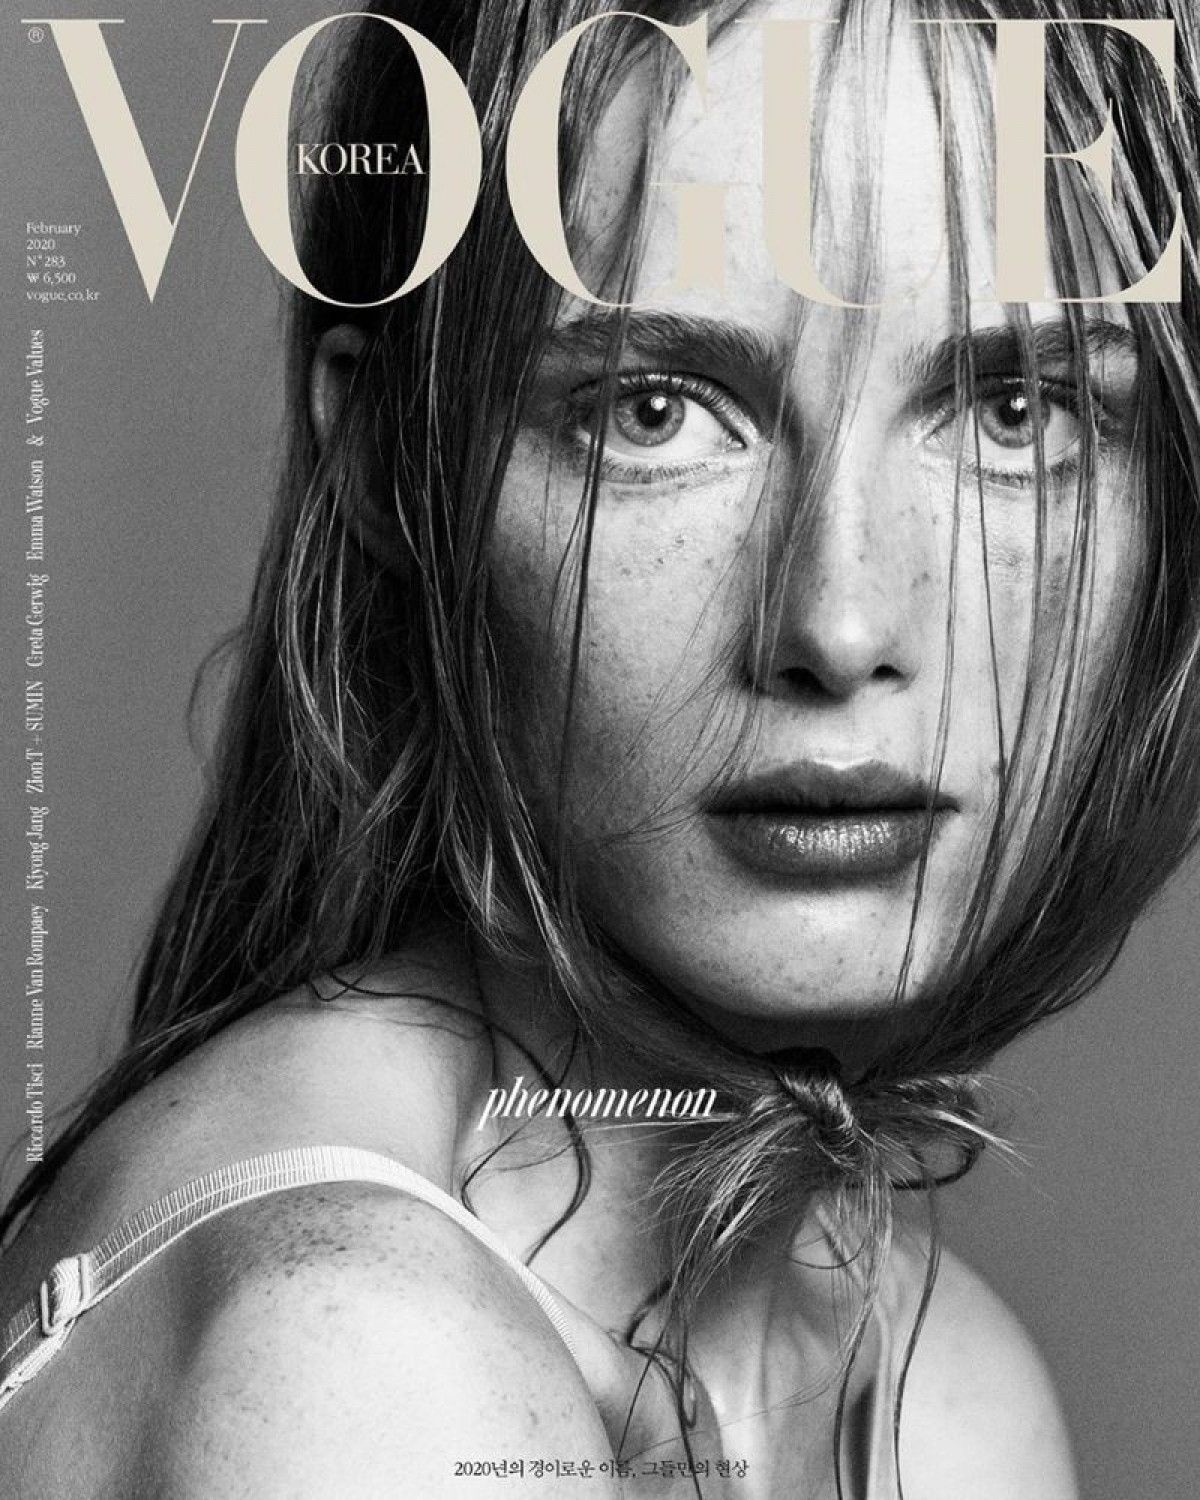 Rianne Van Rompaey by Luigi & Iango for Vogue Korea February 2020